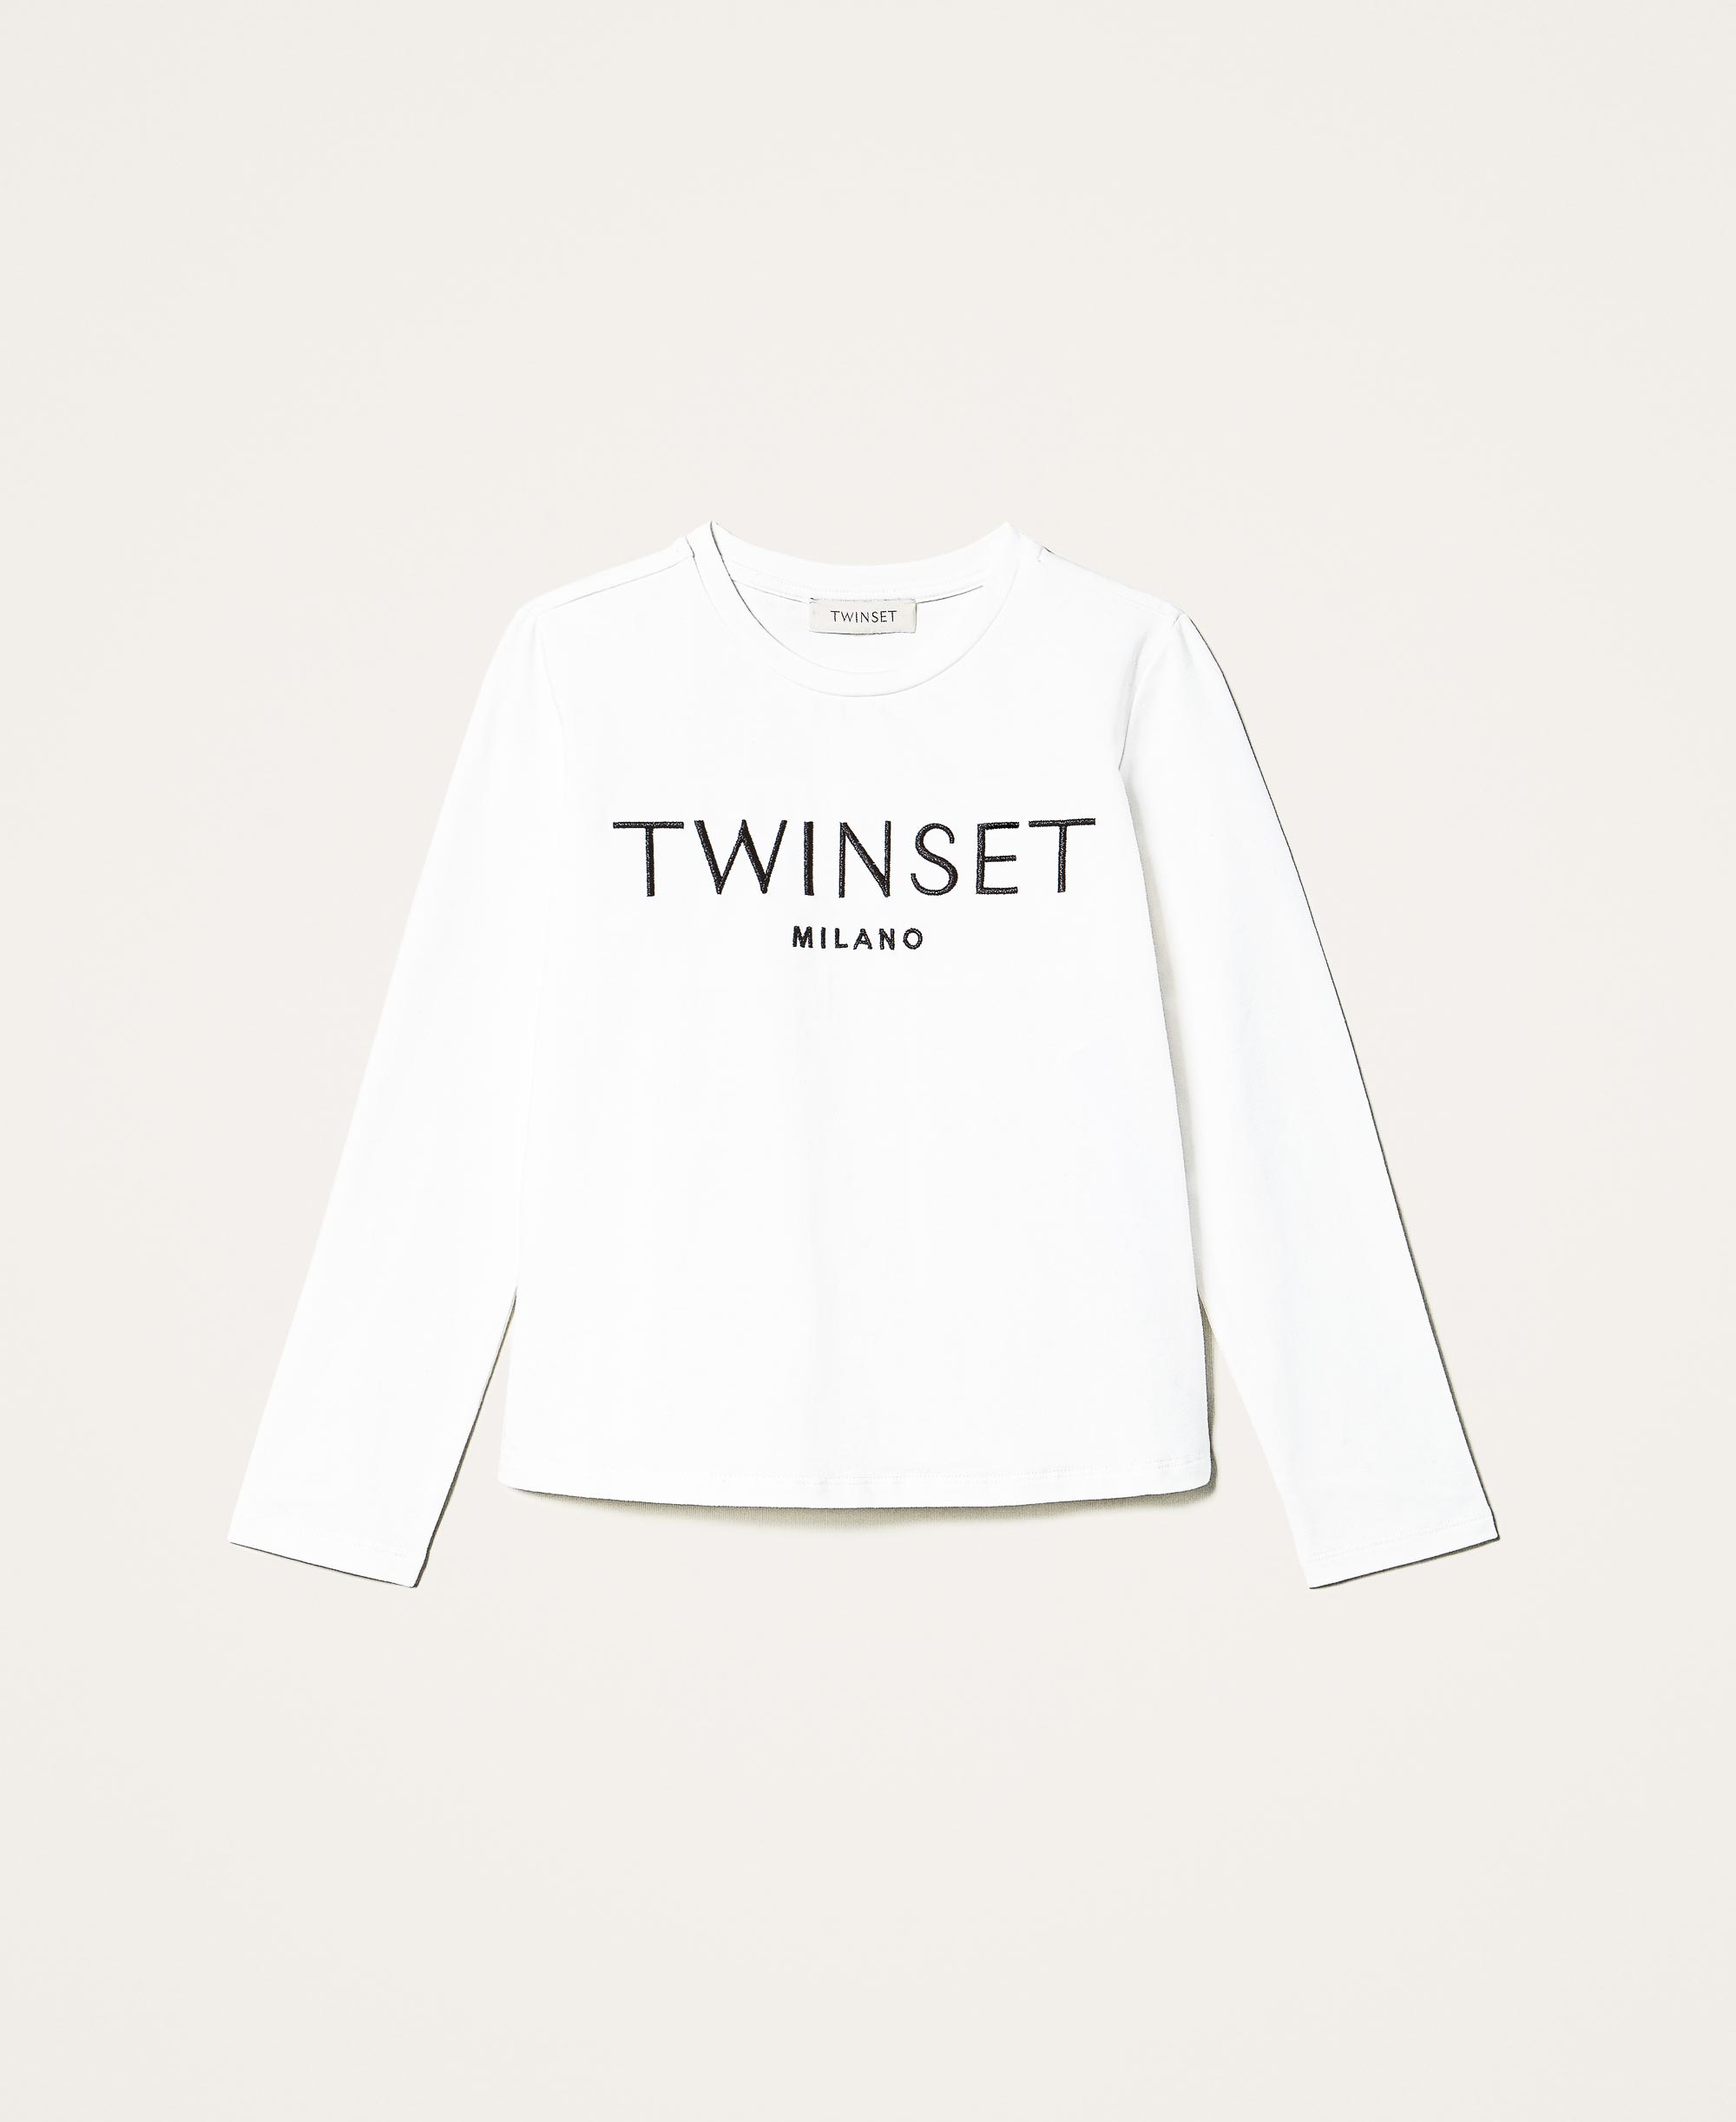 twinset t shirt